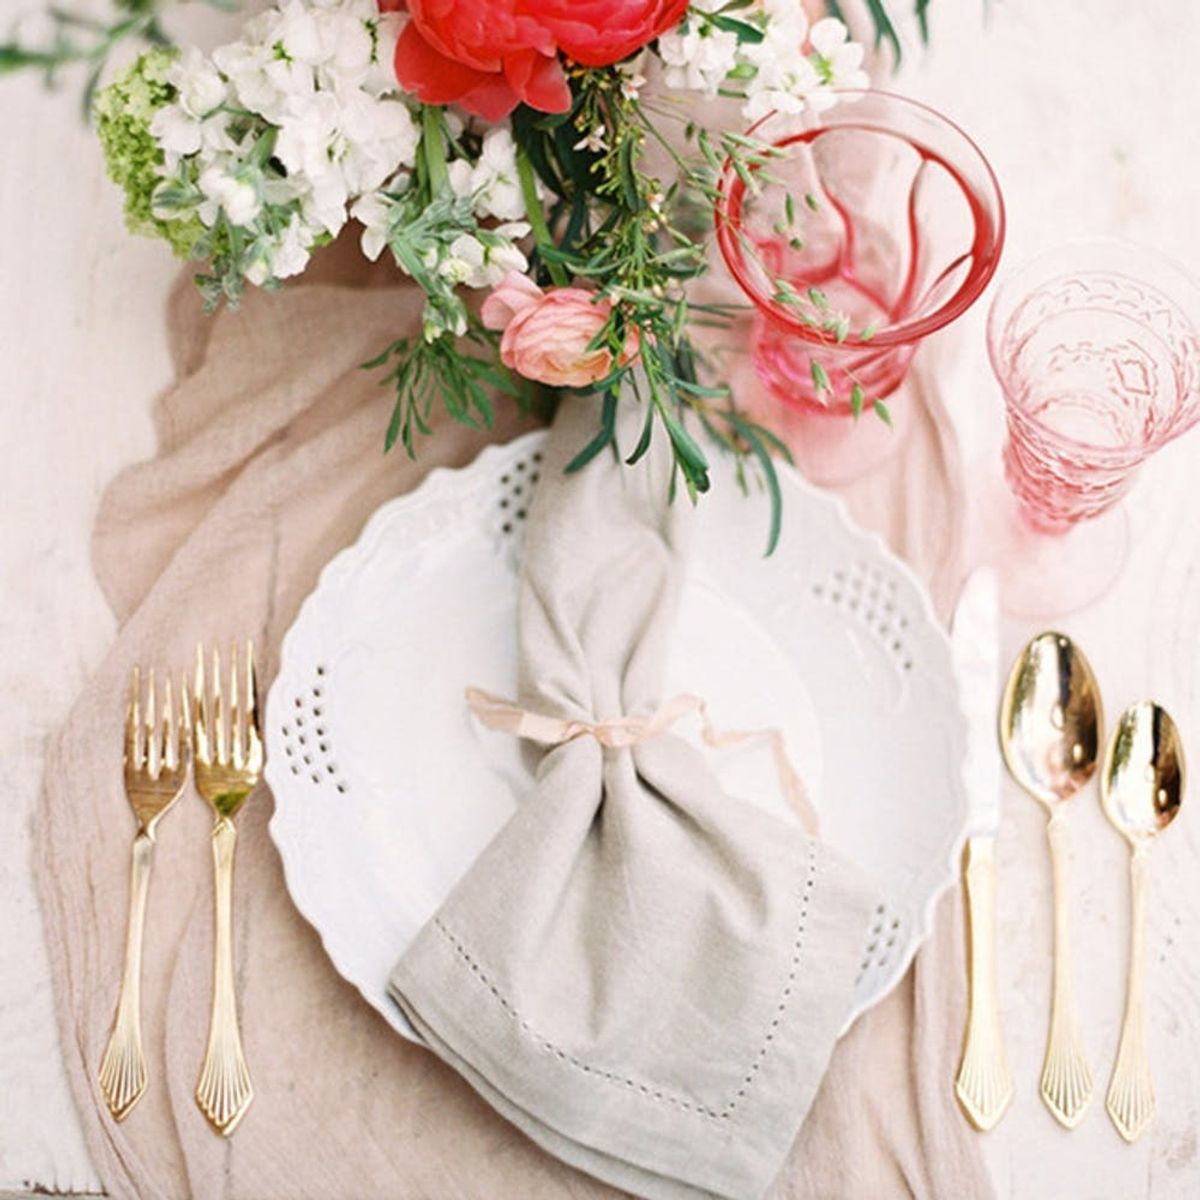 10 Dusty Rose Wedding Decor Ideas for Your Romantic Wedding